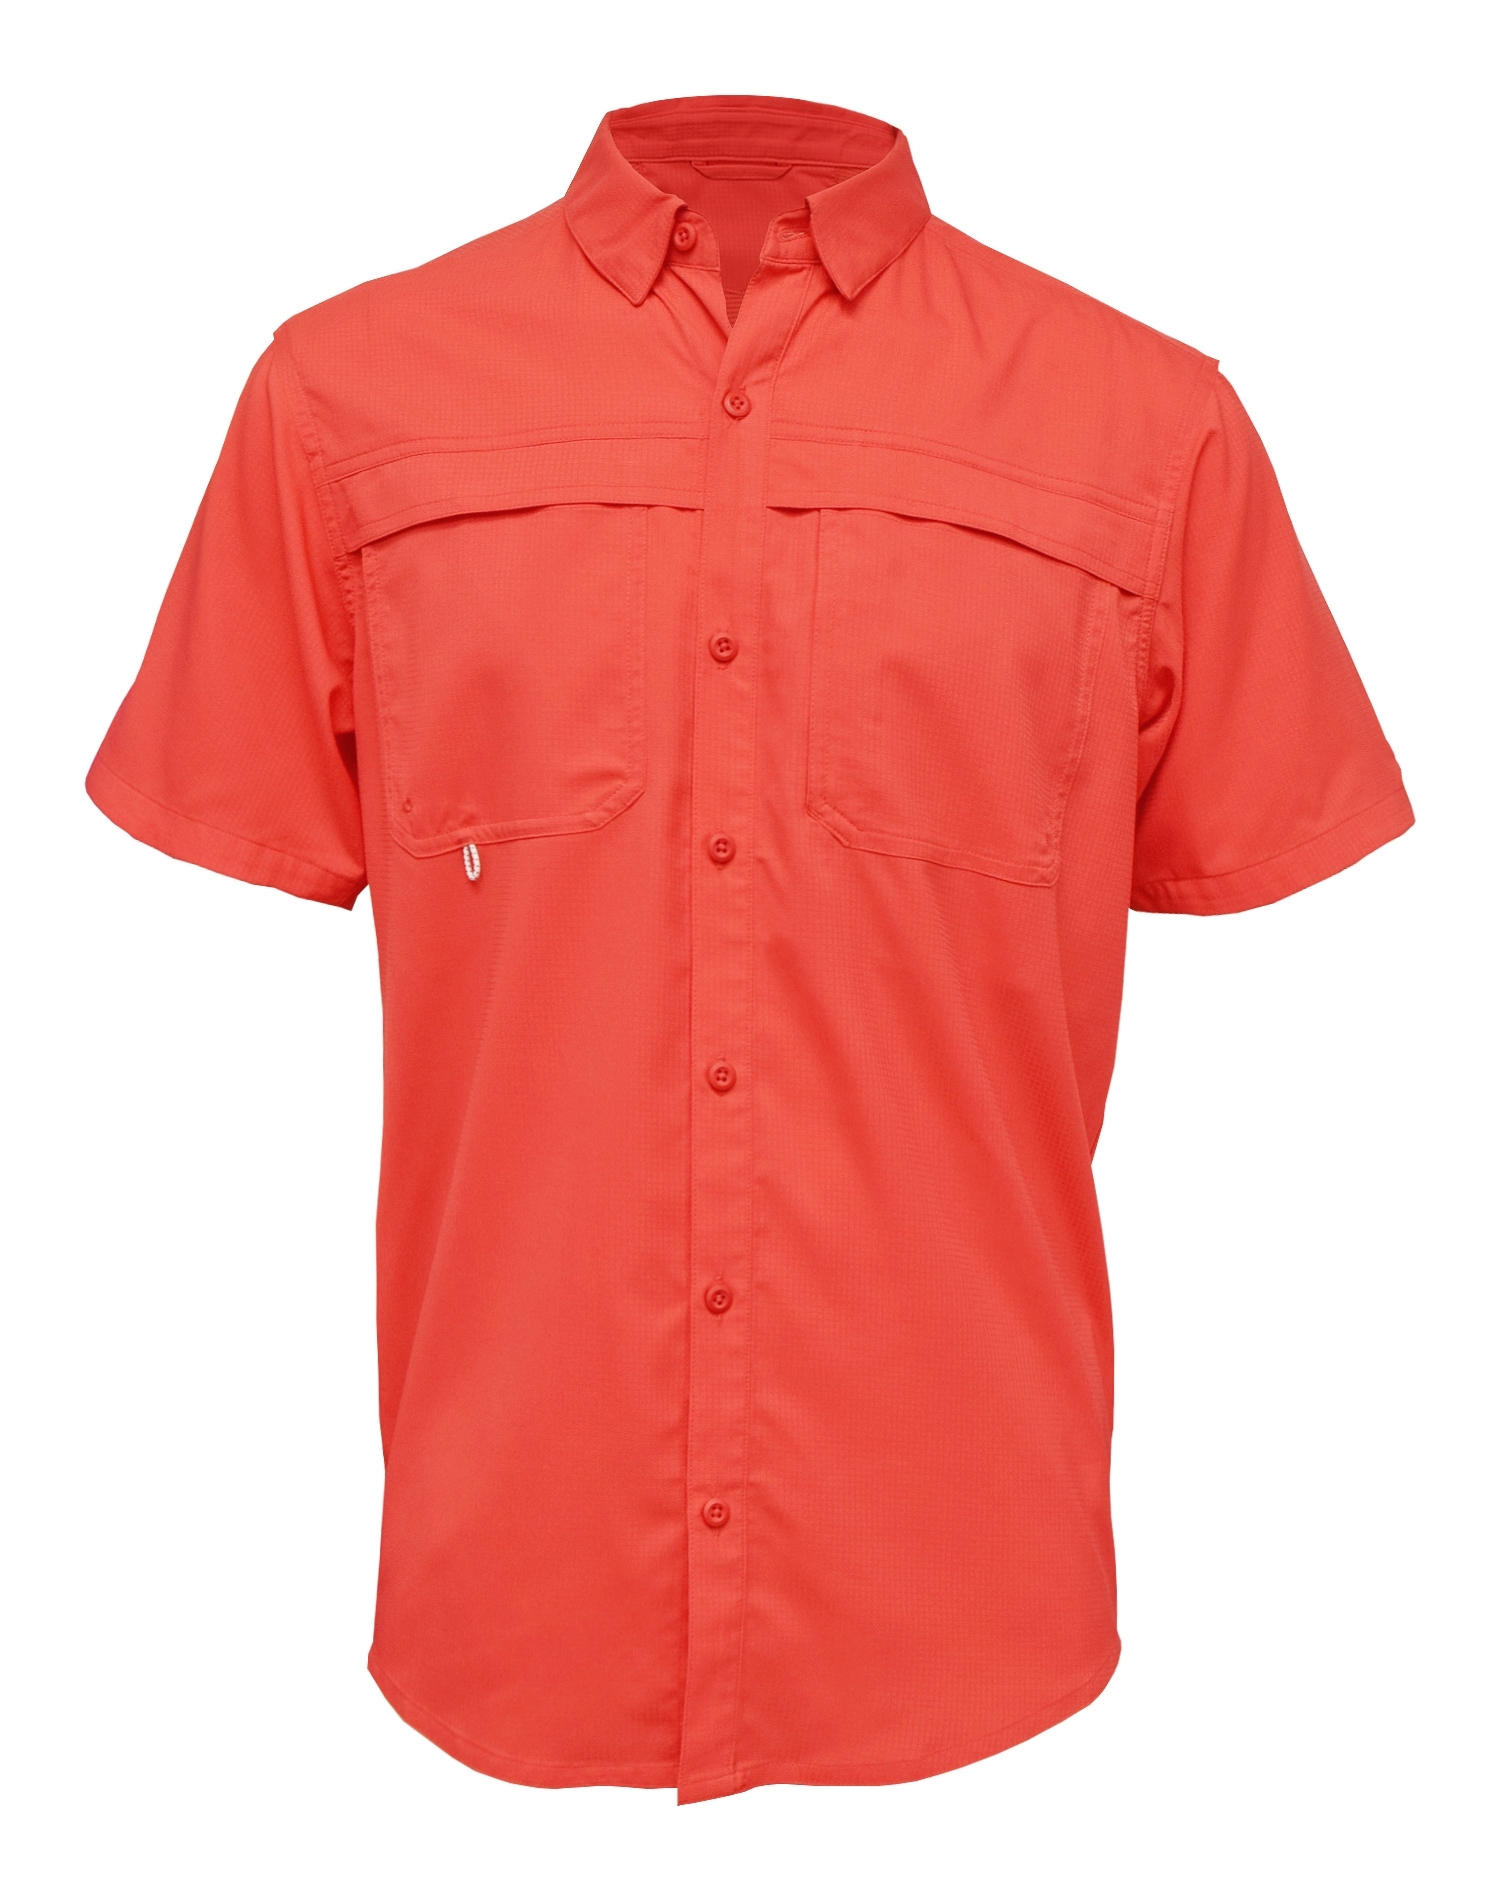 BAW Athletic Wear 3100 Adult Short Sleeve Fishing Shirt Black